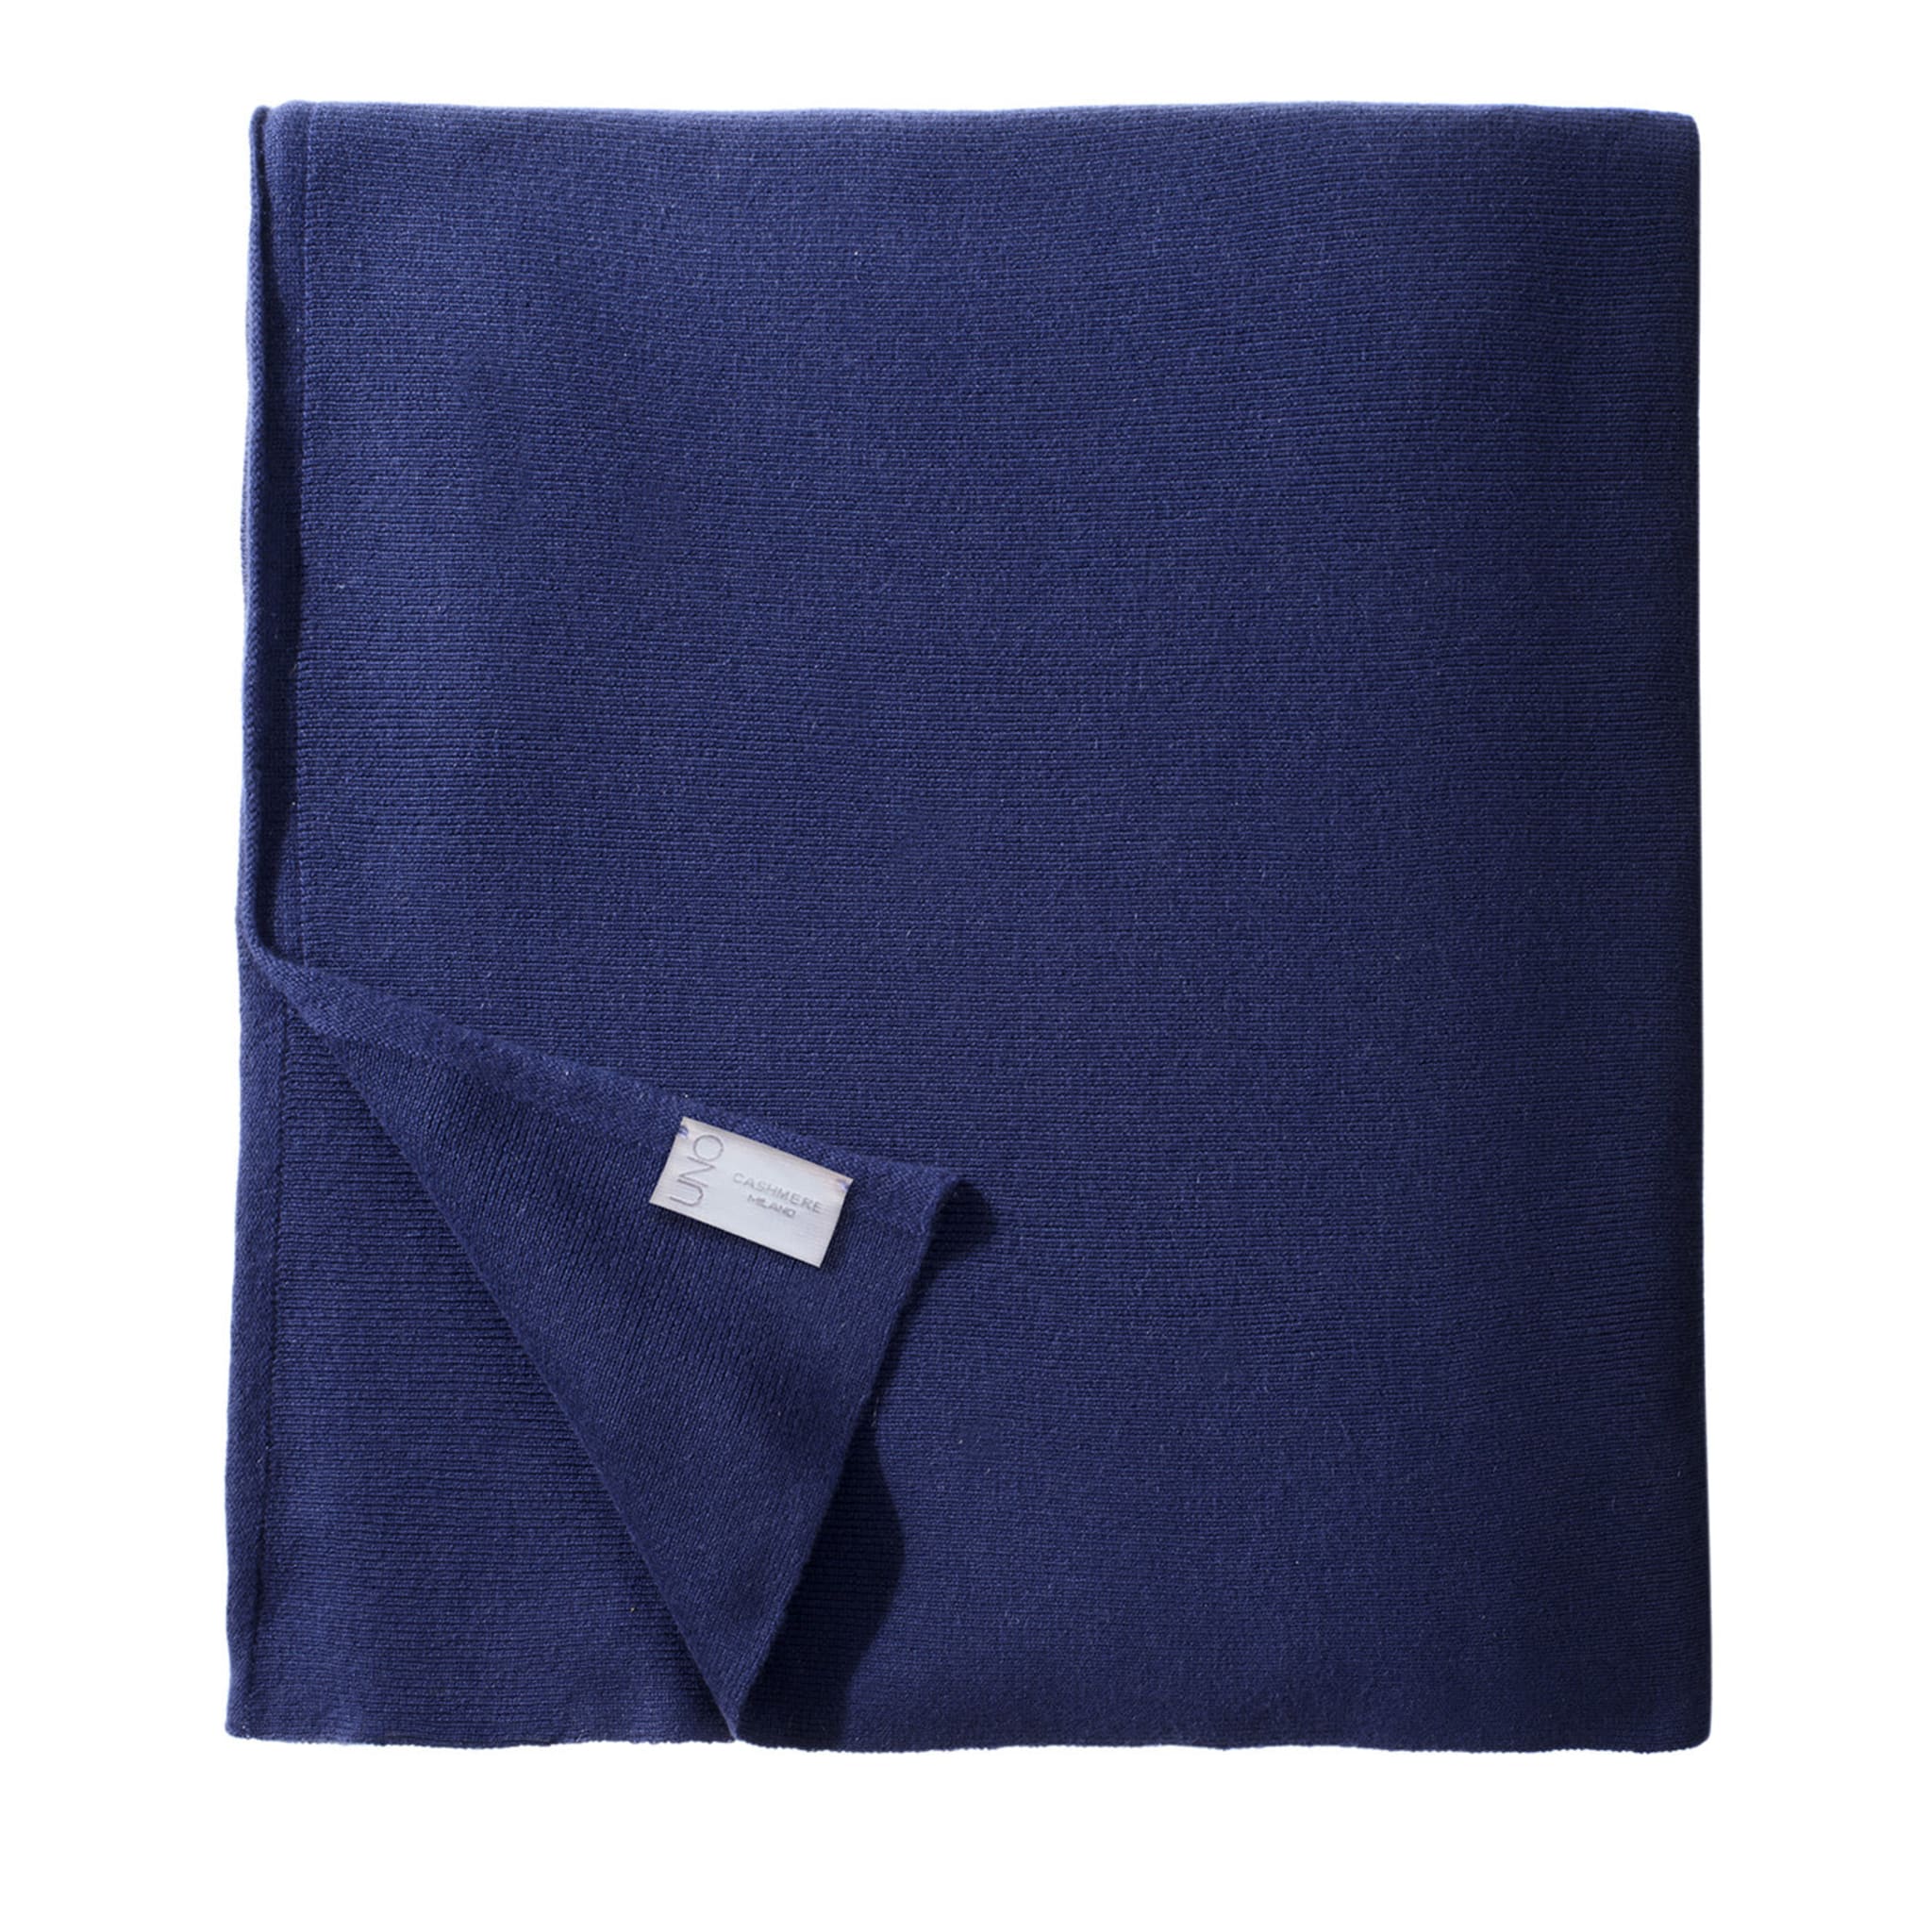 Medium Blue Cashmere Blanket - Main view